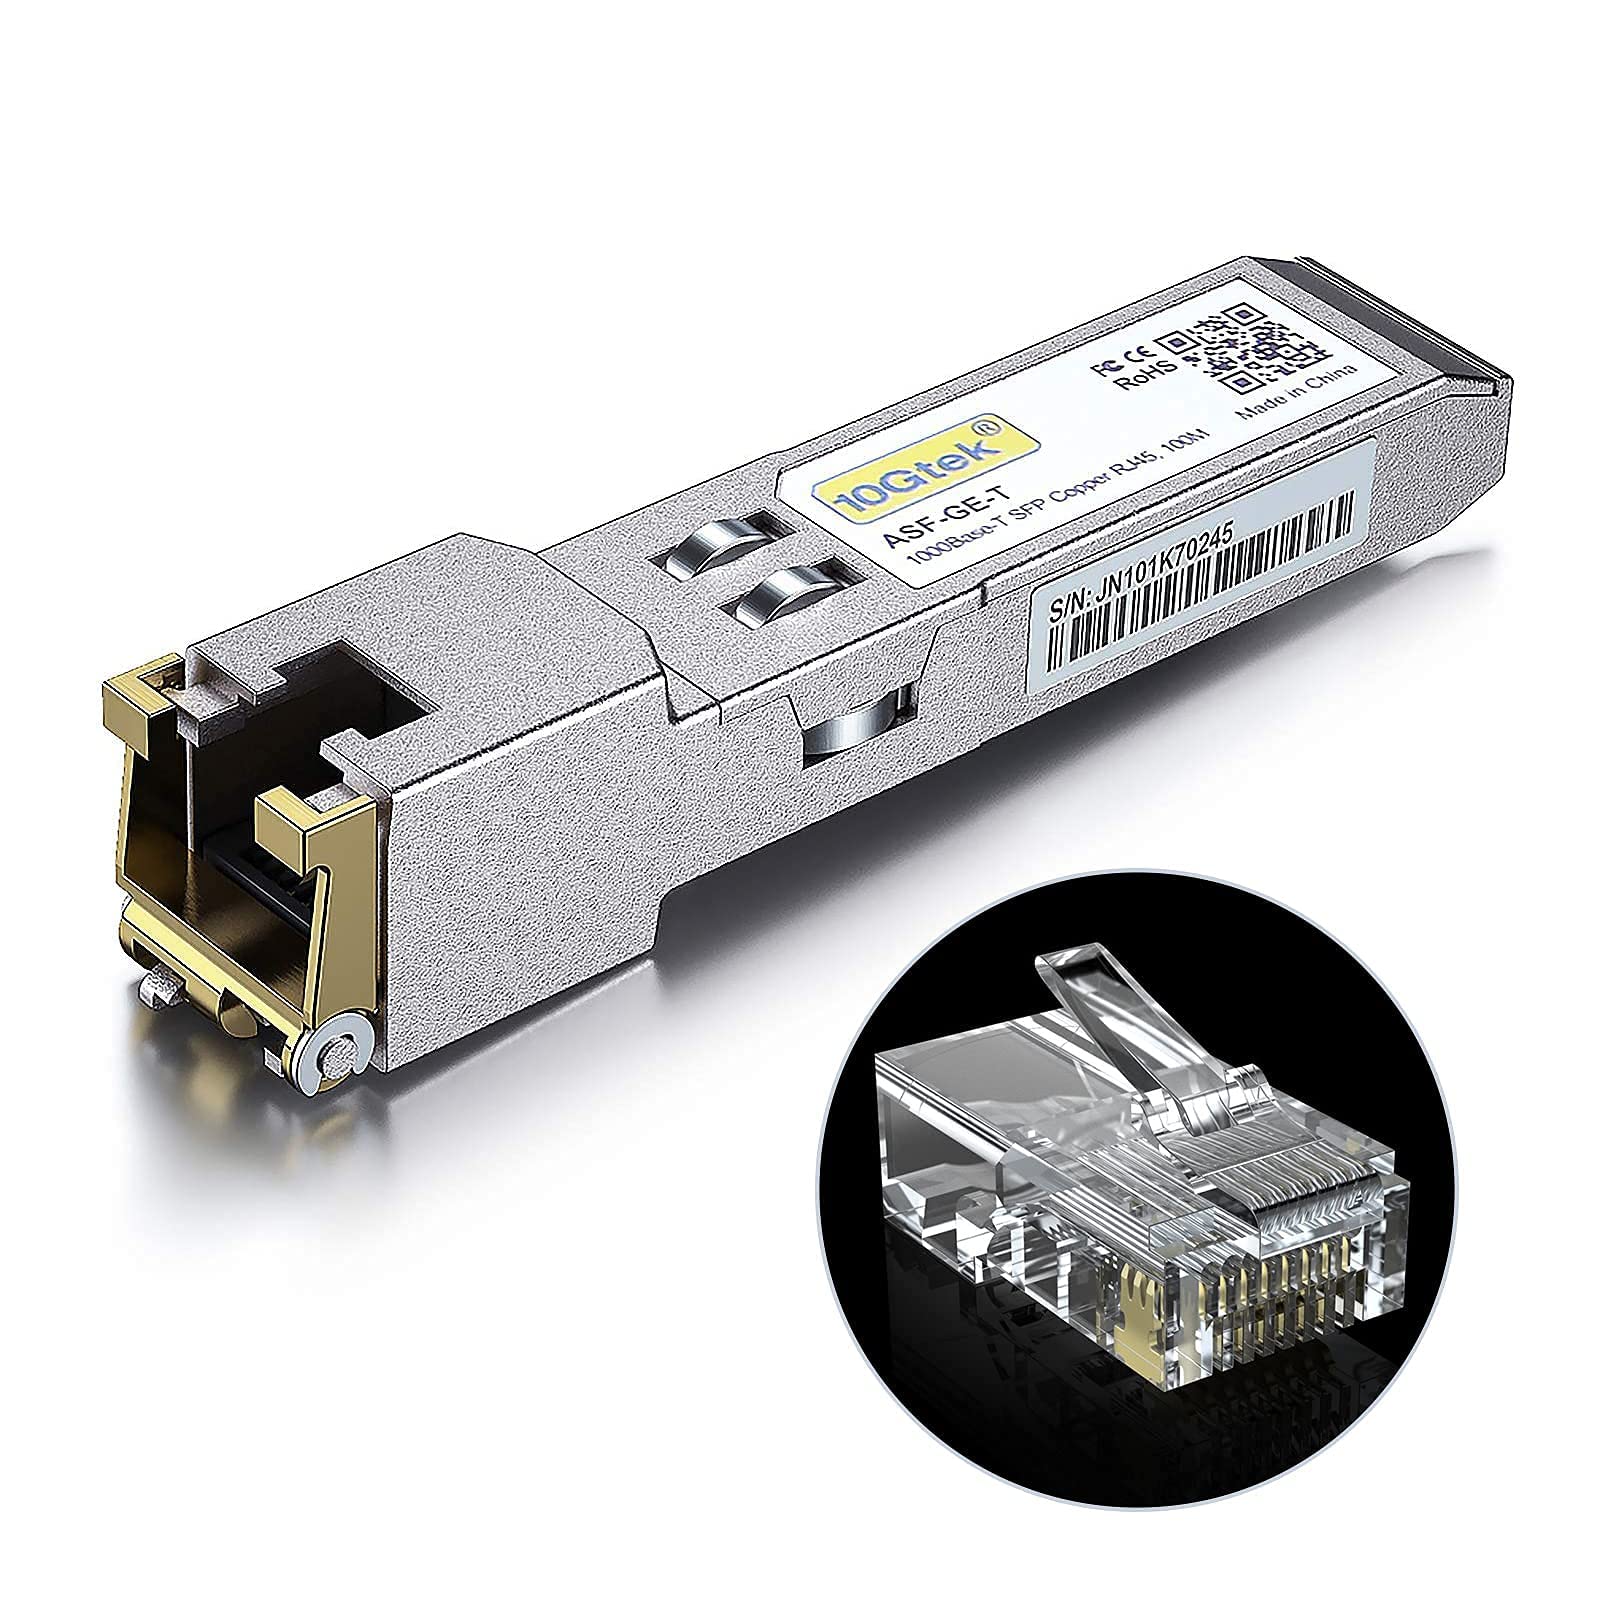 10GBase-LR SFP+ Transceiver, 10G 1310nm SMF, up to 10 km, Compatible with Cisco  SFP-10G-LR, Meraki MA-SFP-10GB-LR, Ubiquiti UniFi UF-SM-10G, Fortinet,  Mikrotik, Netgear, D-Link and More, 10 Pack